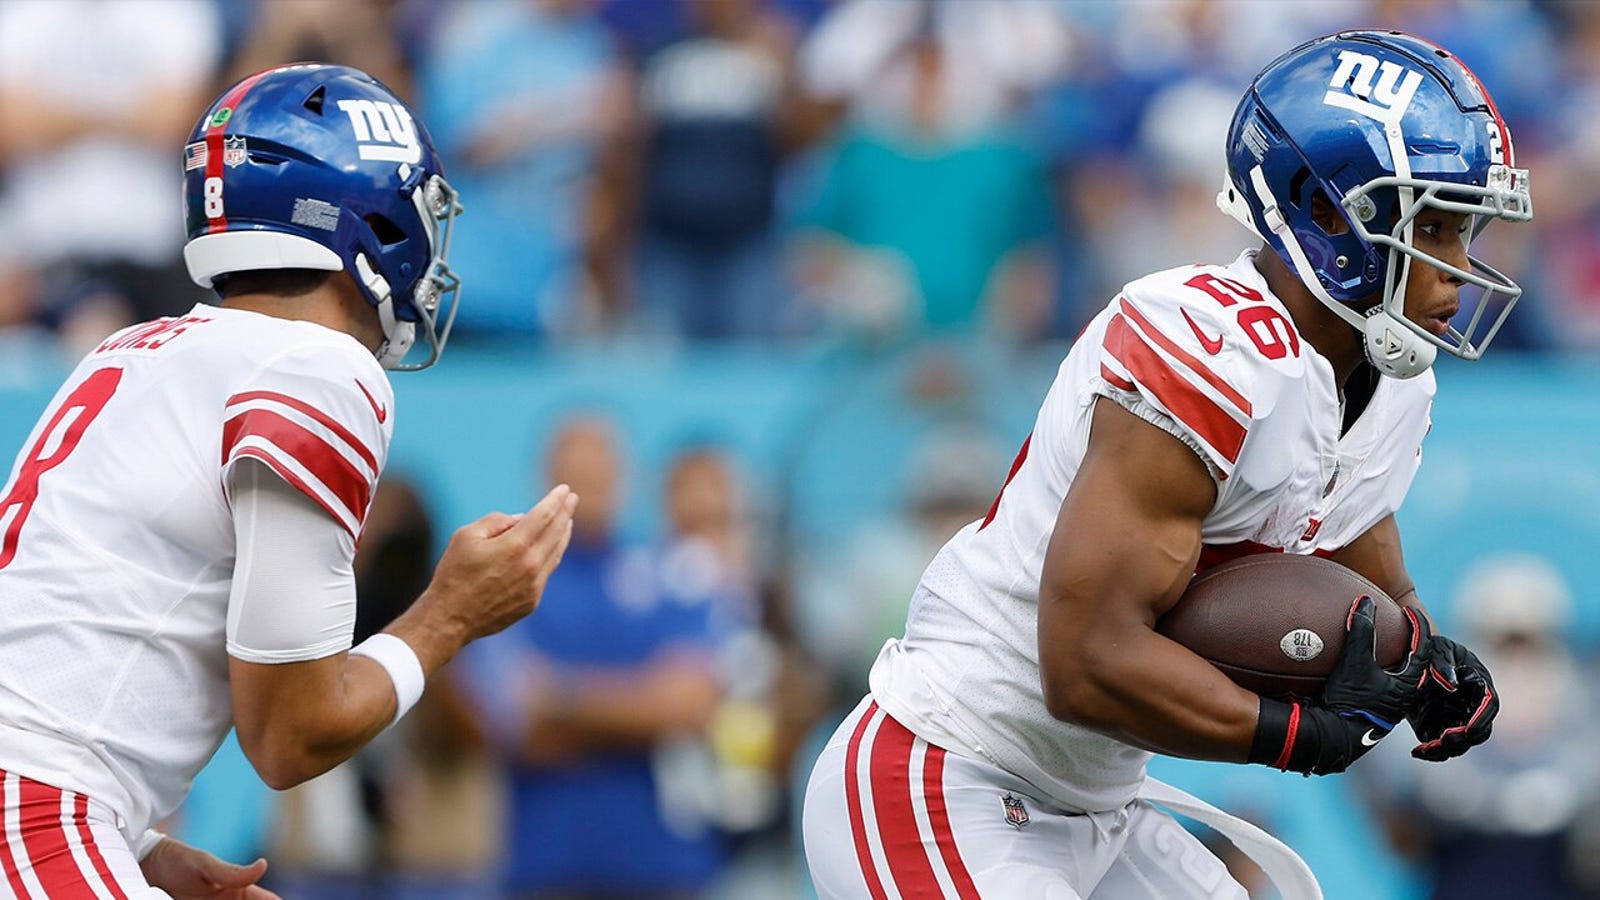 Saquon Barkley sparks Giants' 21-20 come back win over Titans